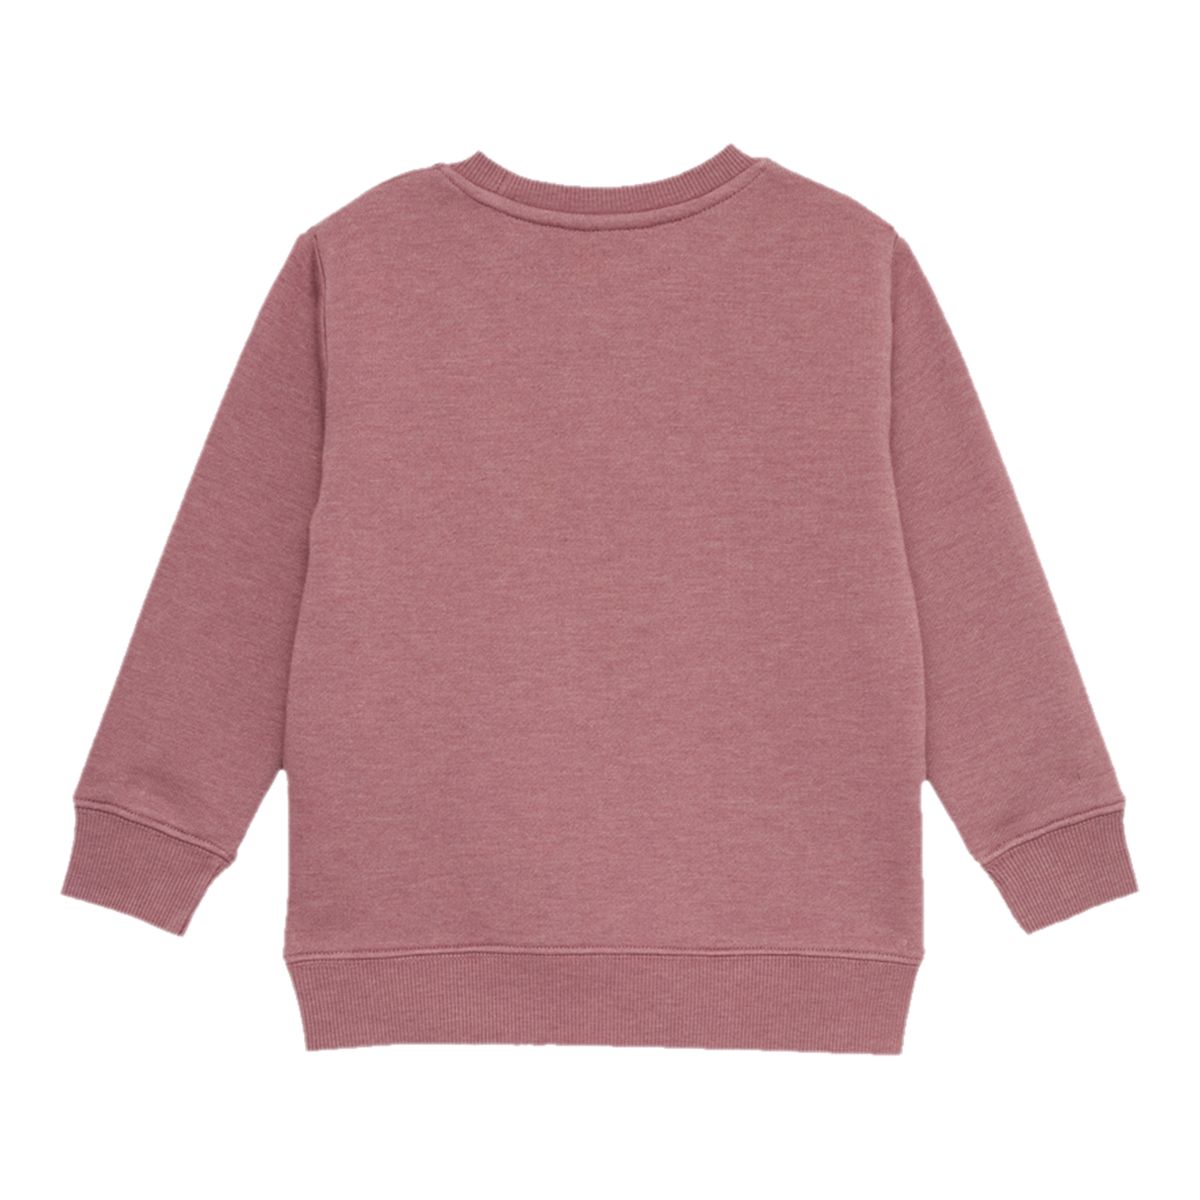 LOVE Sweatshirt, Mauve - Medium